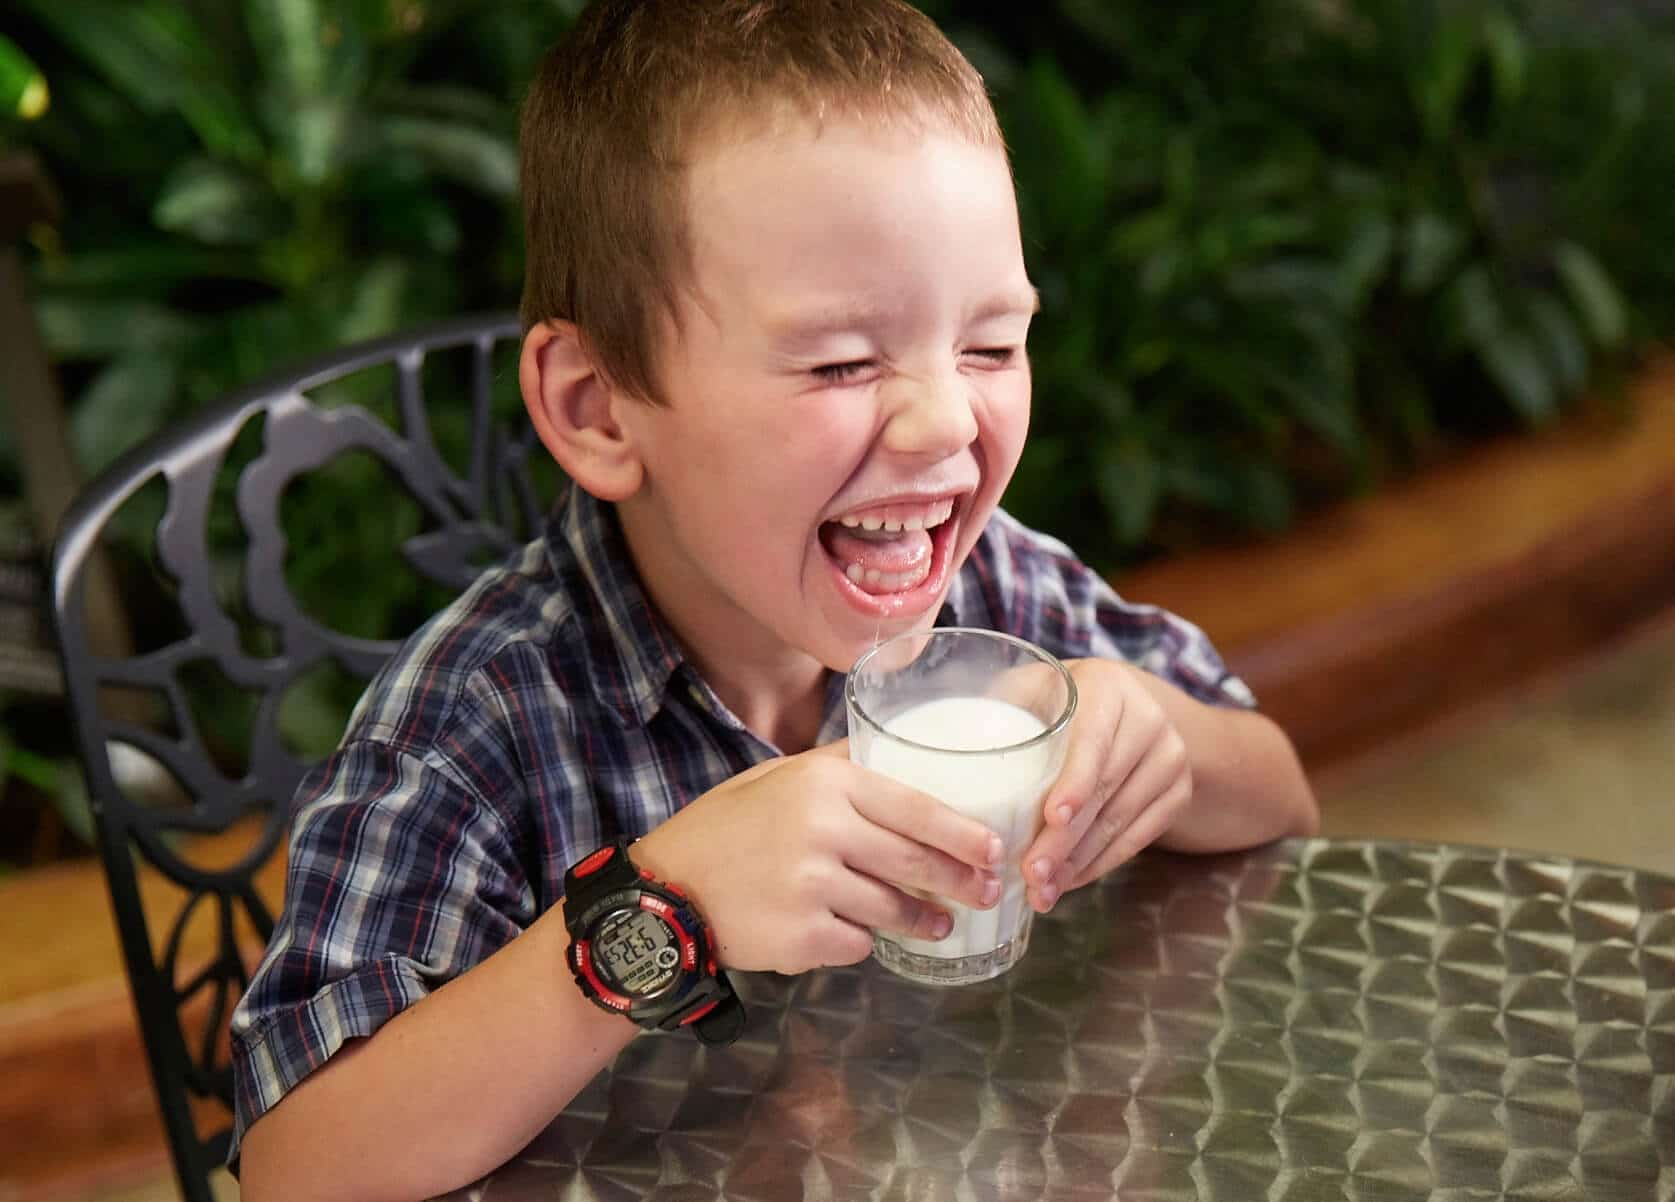 Kid enjoying a glass of milk